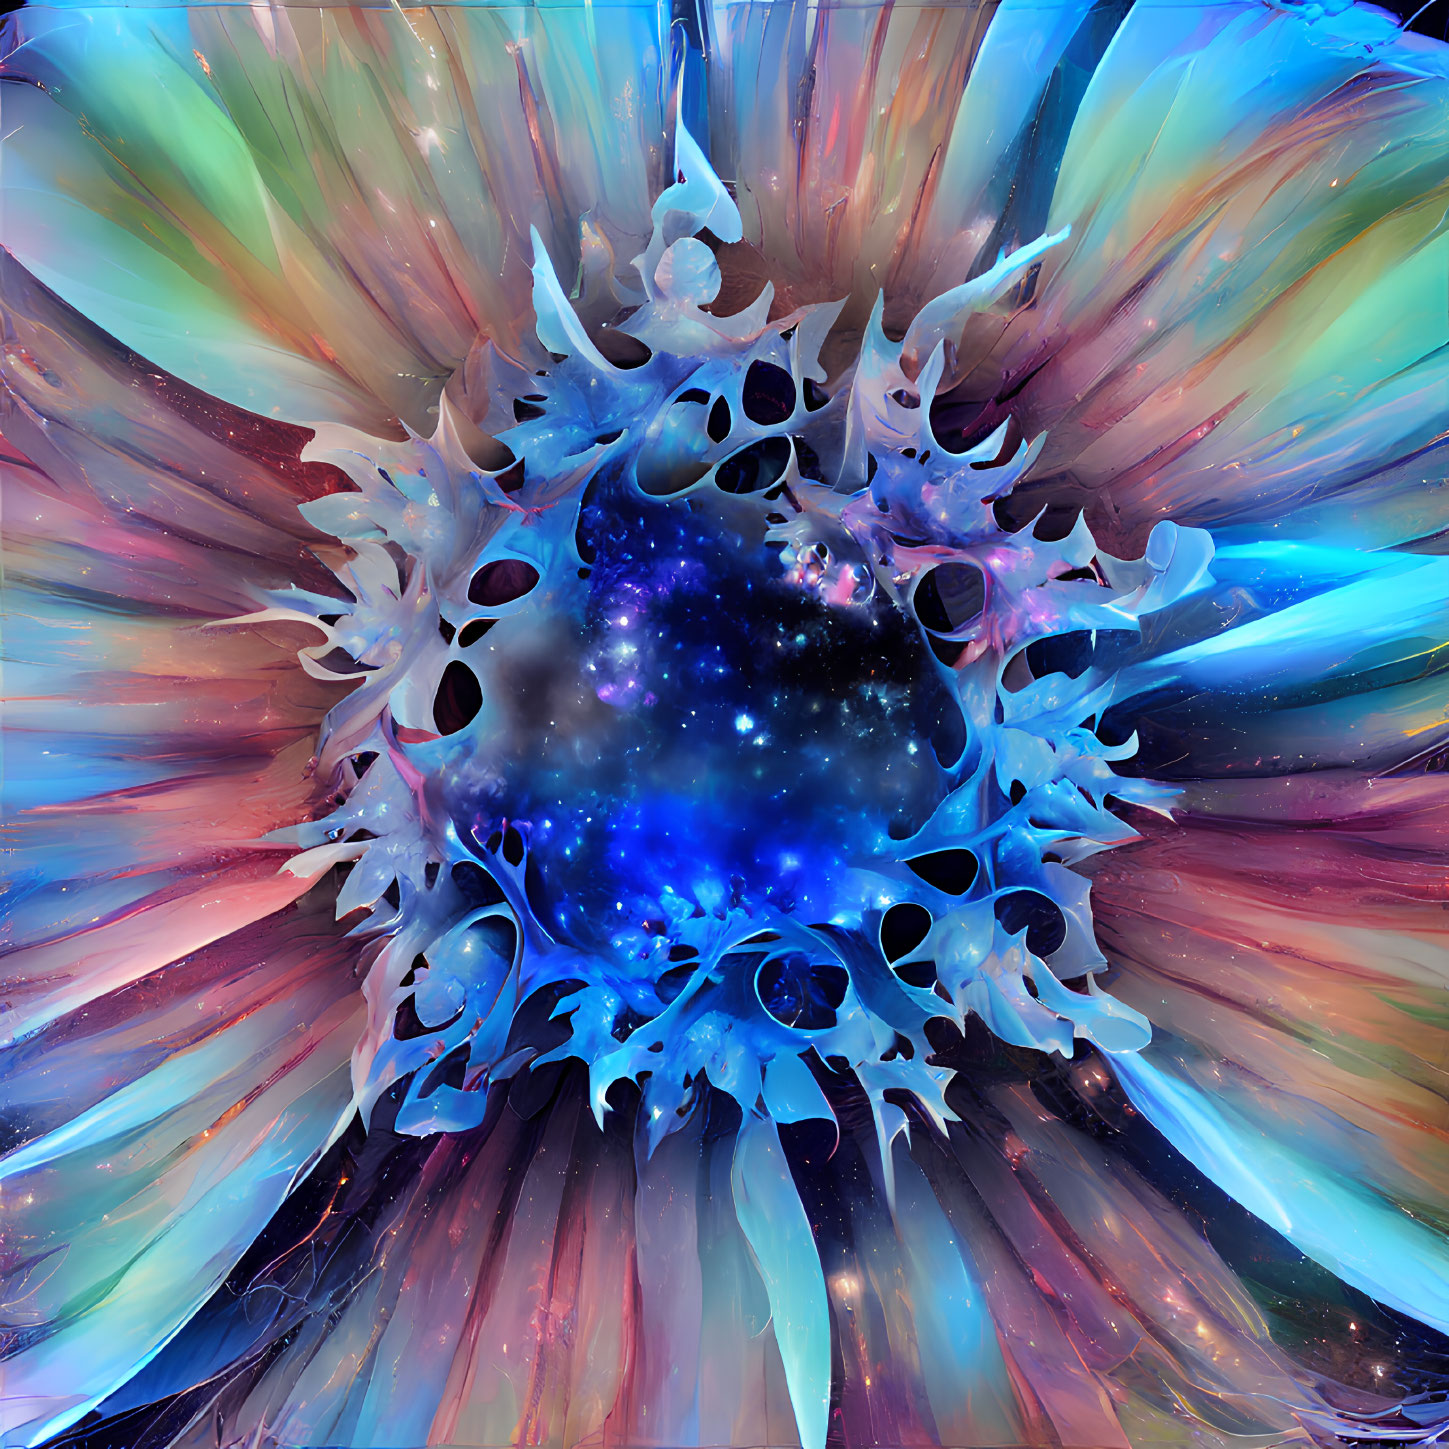 Colorful Fractal Patterns Surround Cosmic Center in Digital Art